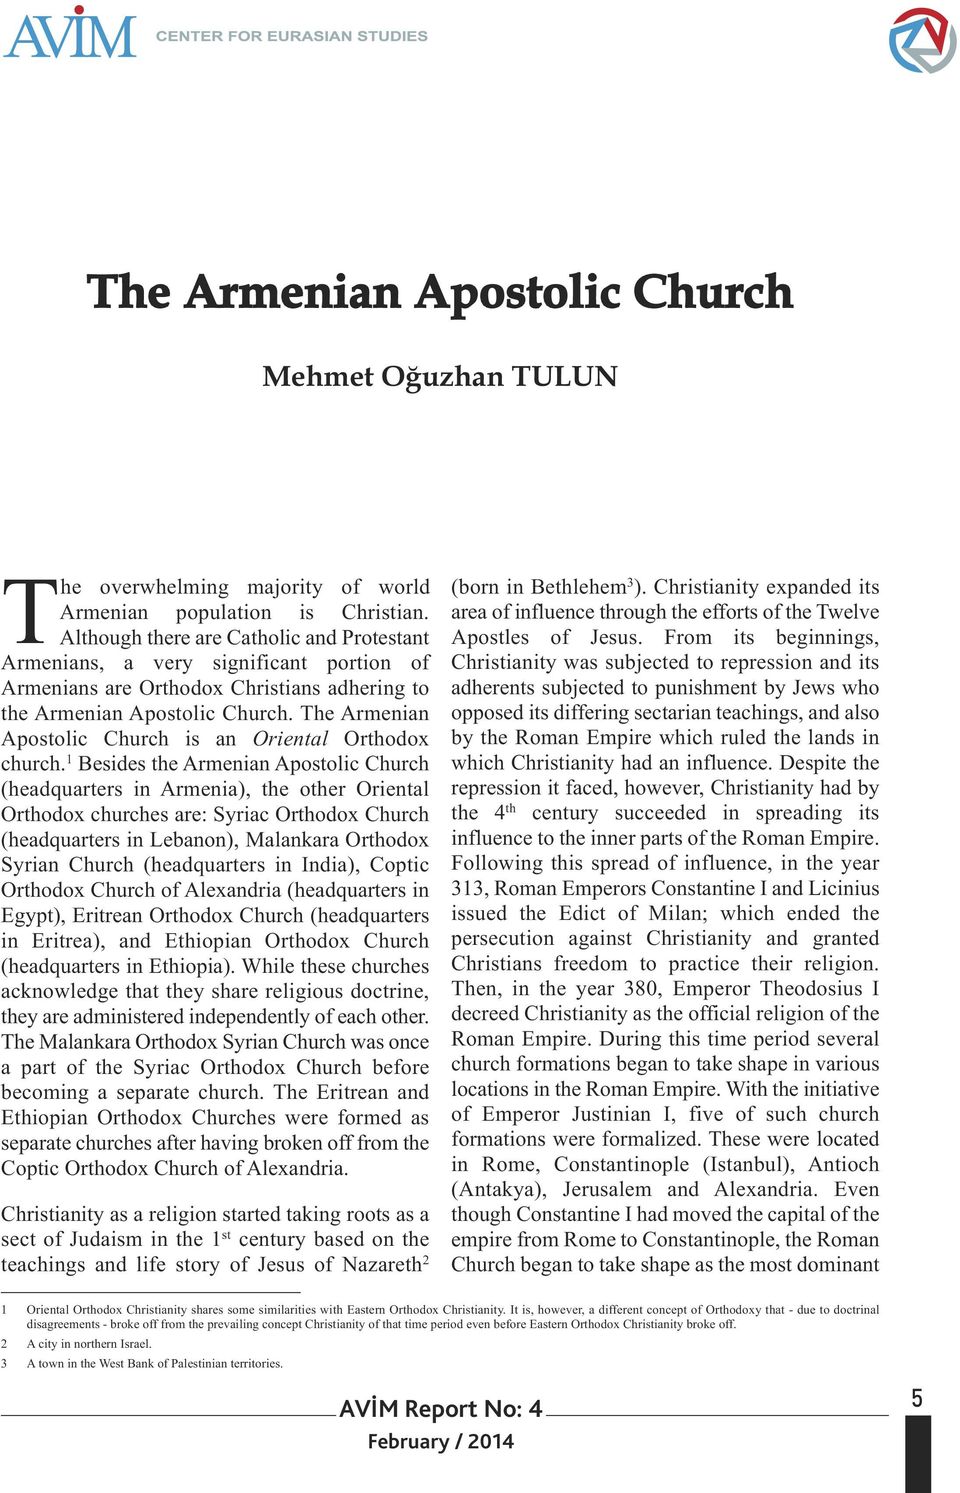 The Armenian Apostolic Church is an Oriental Orthodox church.